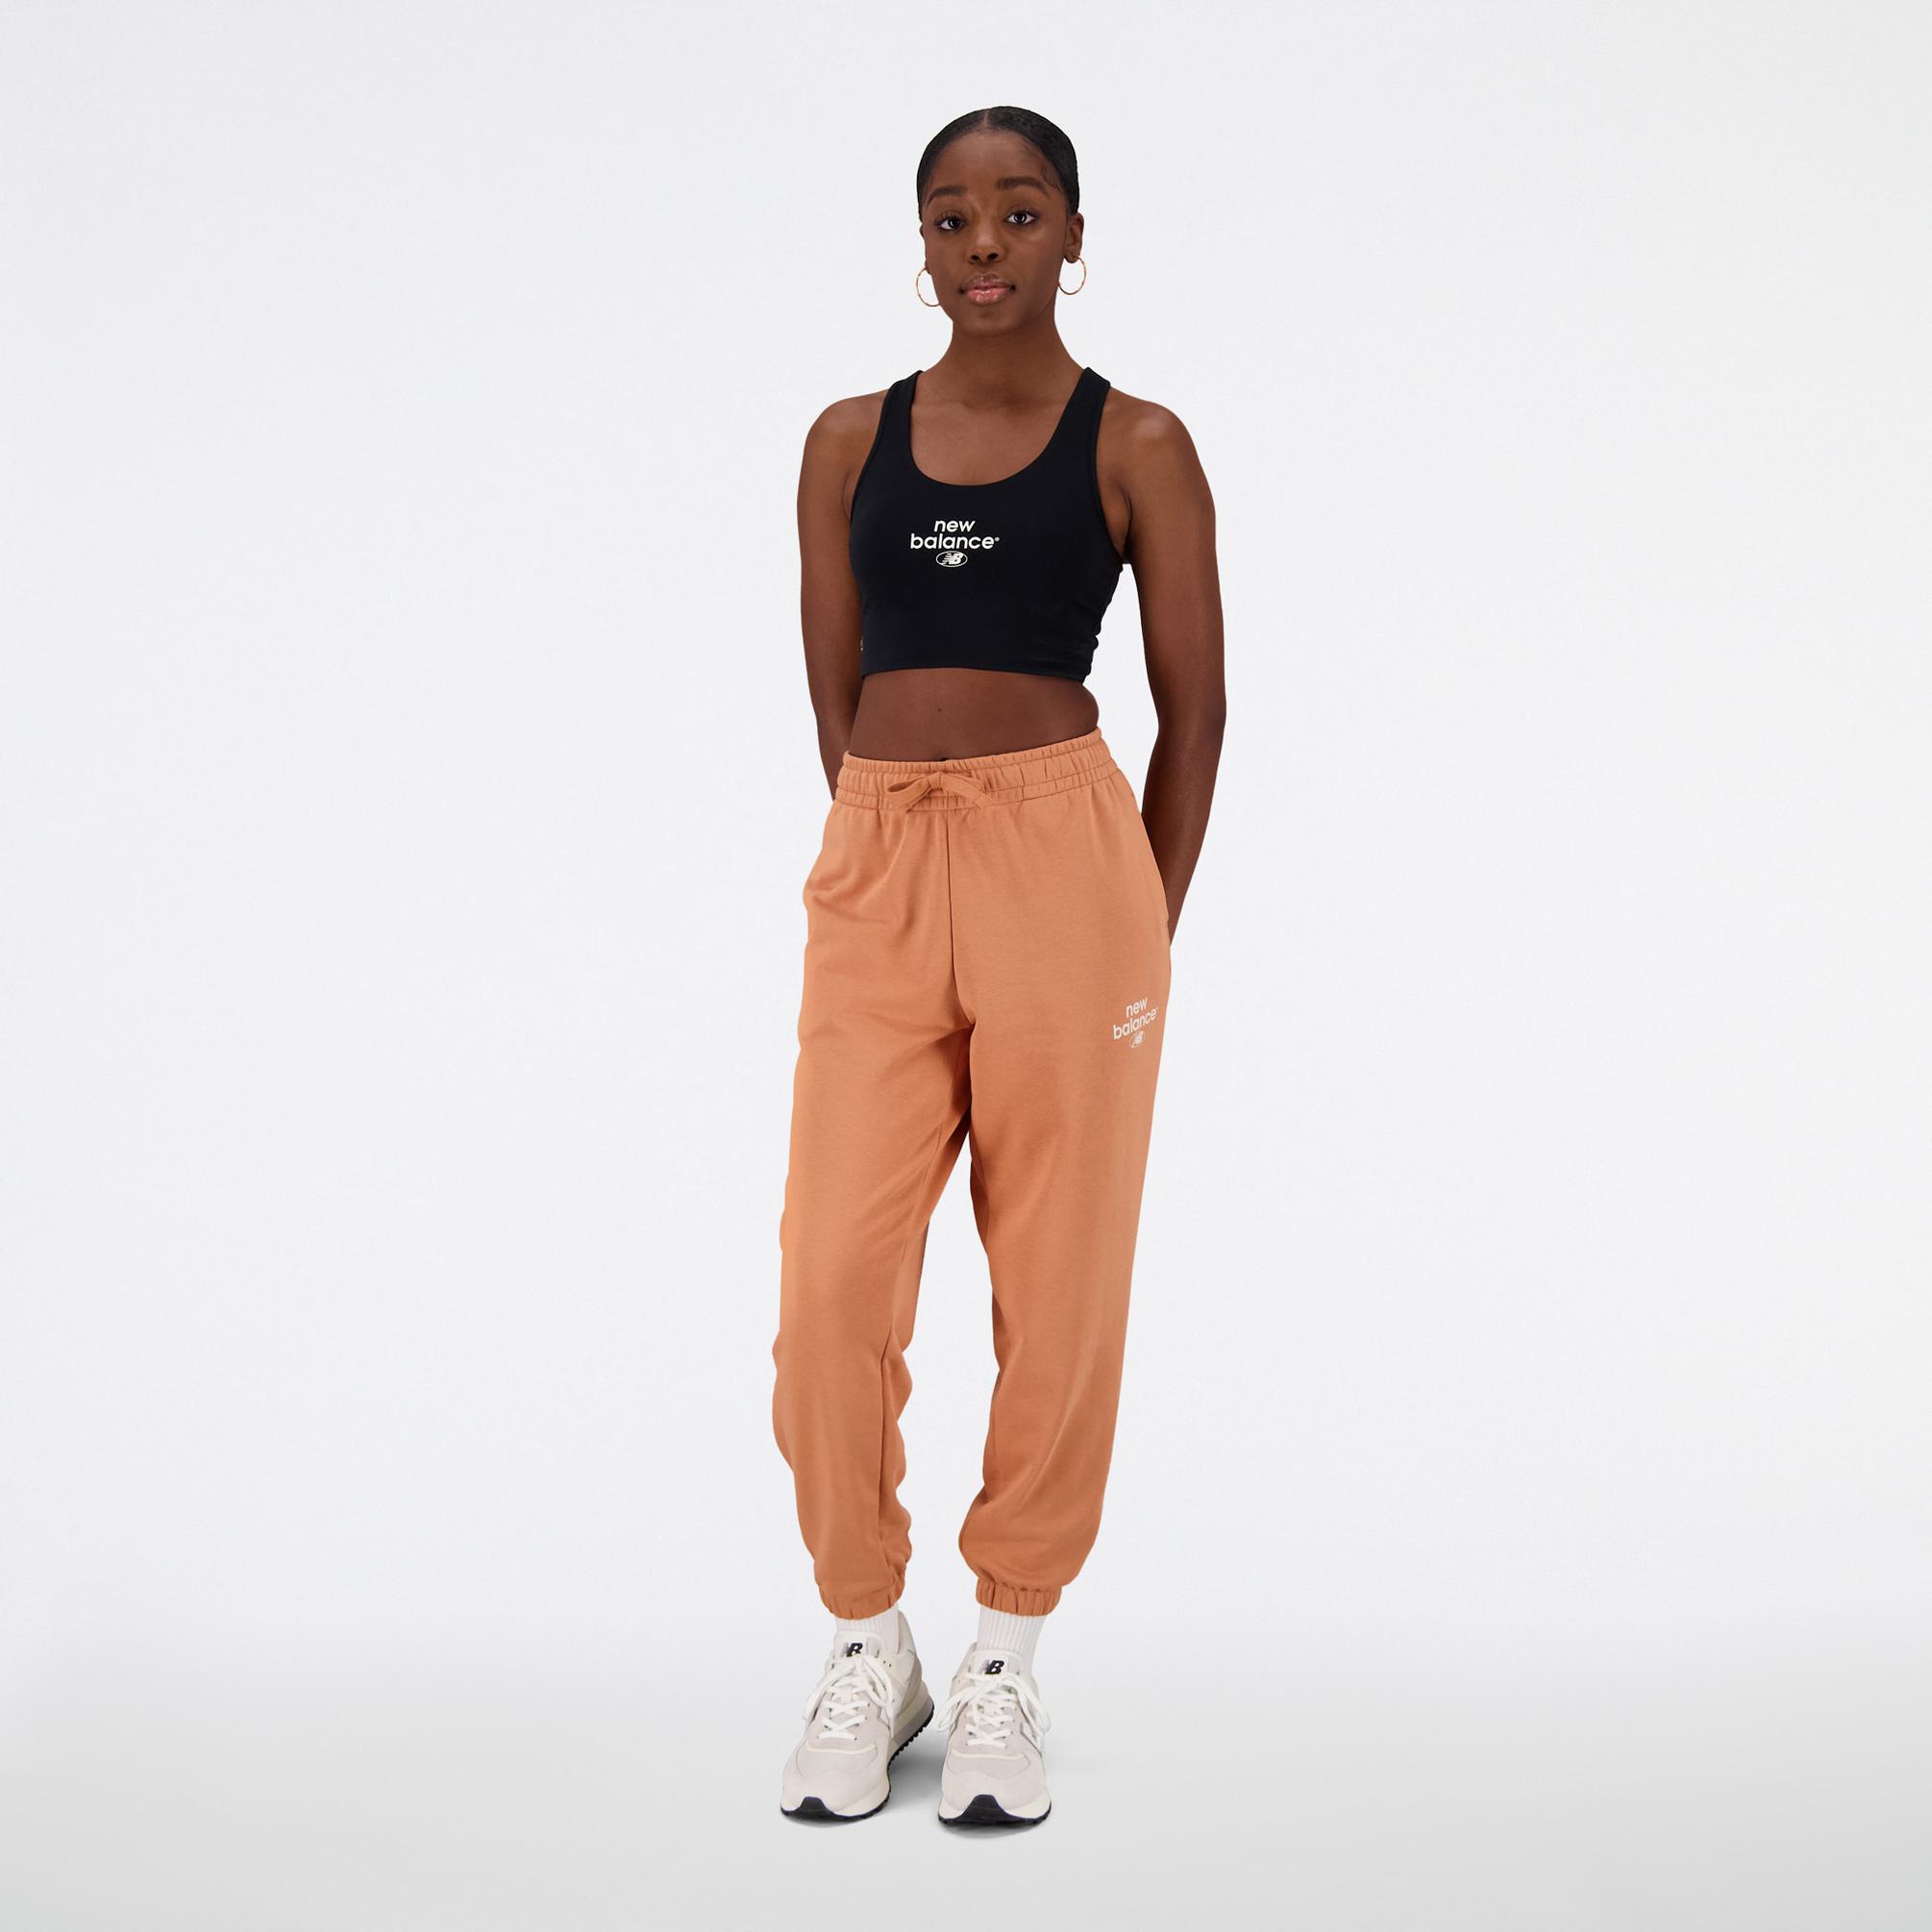  New Balance Essentials Reimagined Kadın Siyah Bra